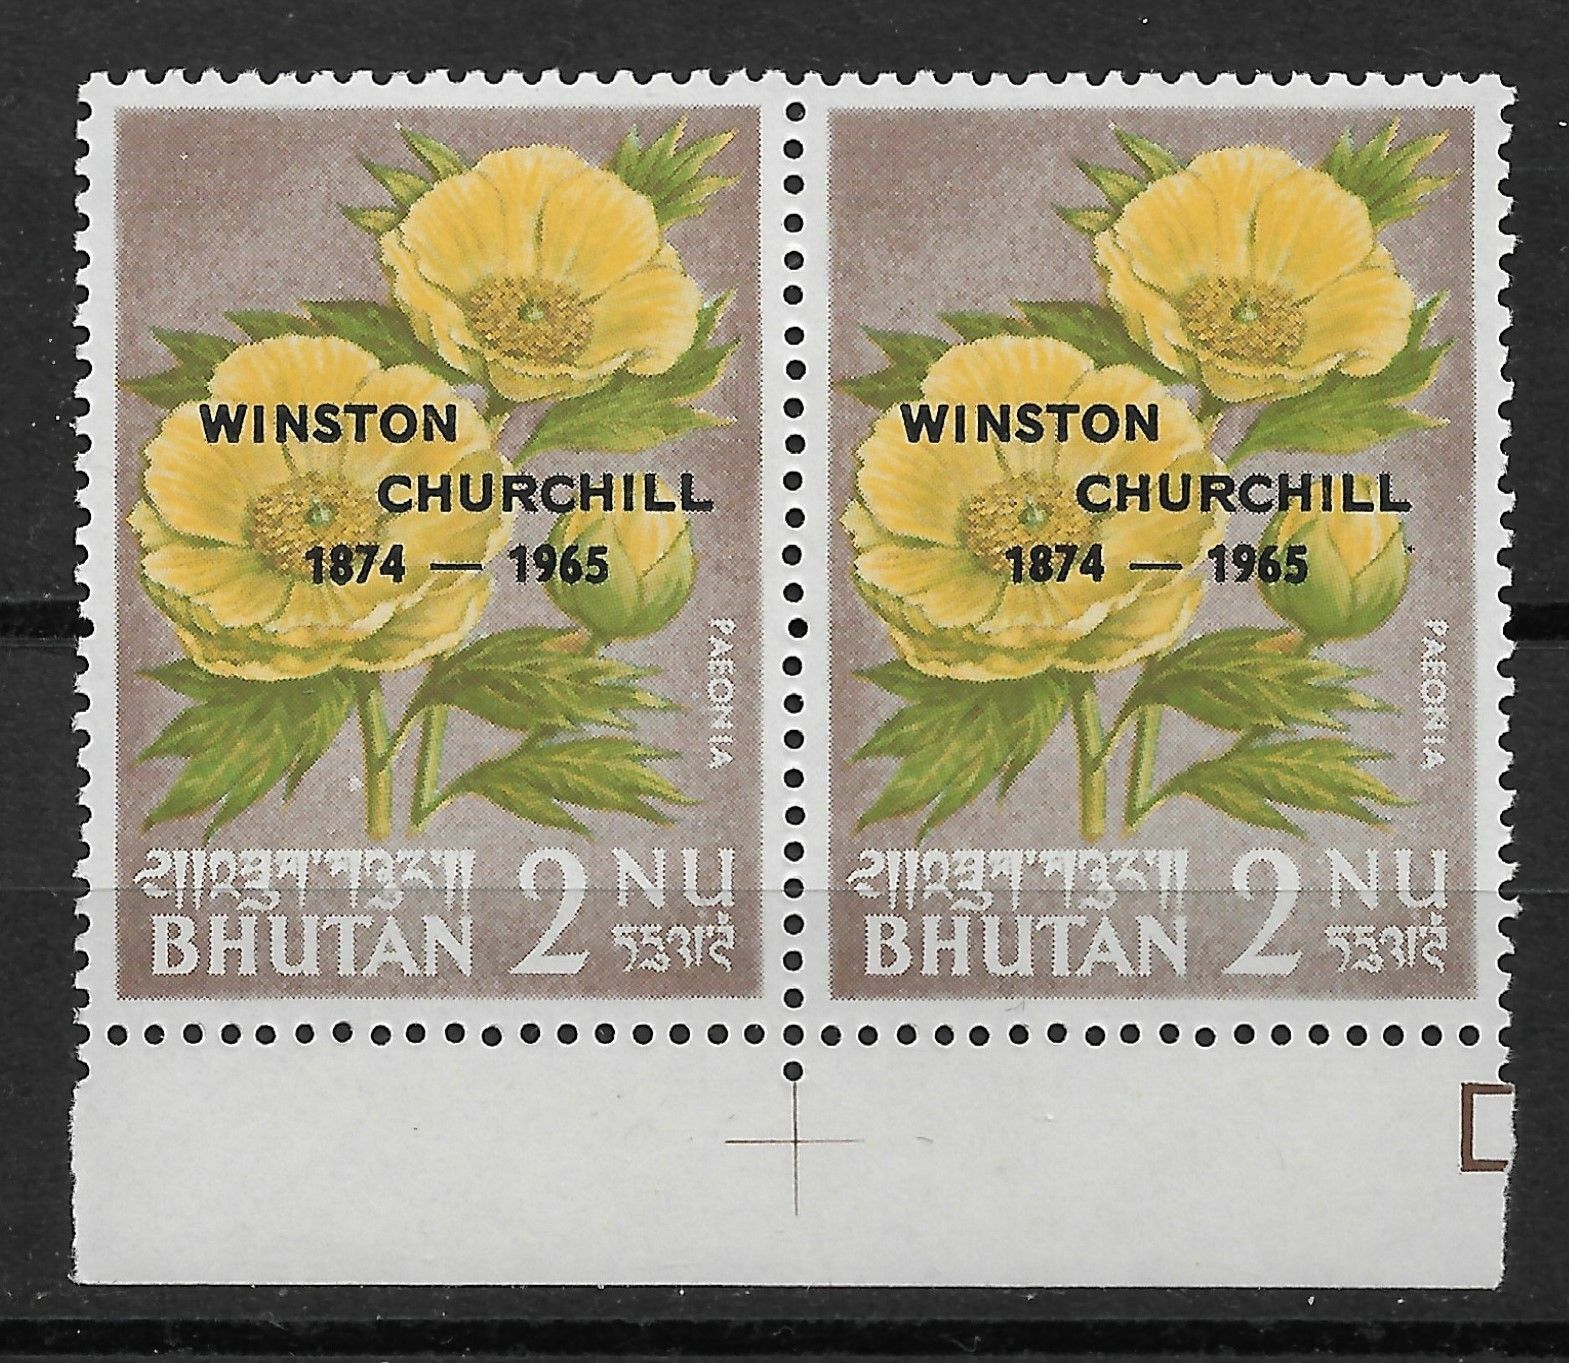 Bhutan 1965, Winston Churchill Overprinted, Pair, Scott # 45,VF